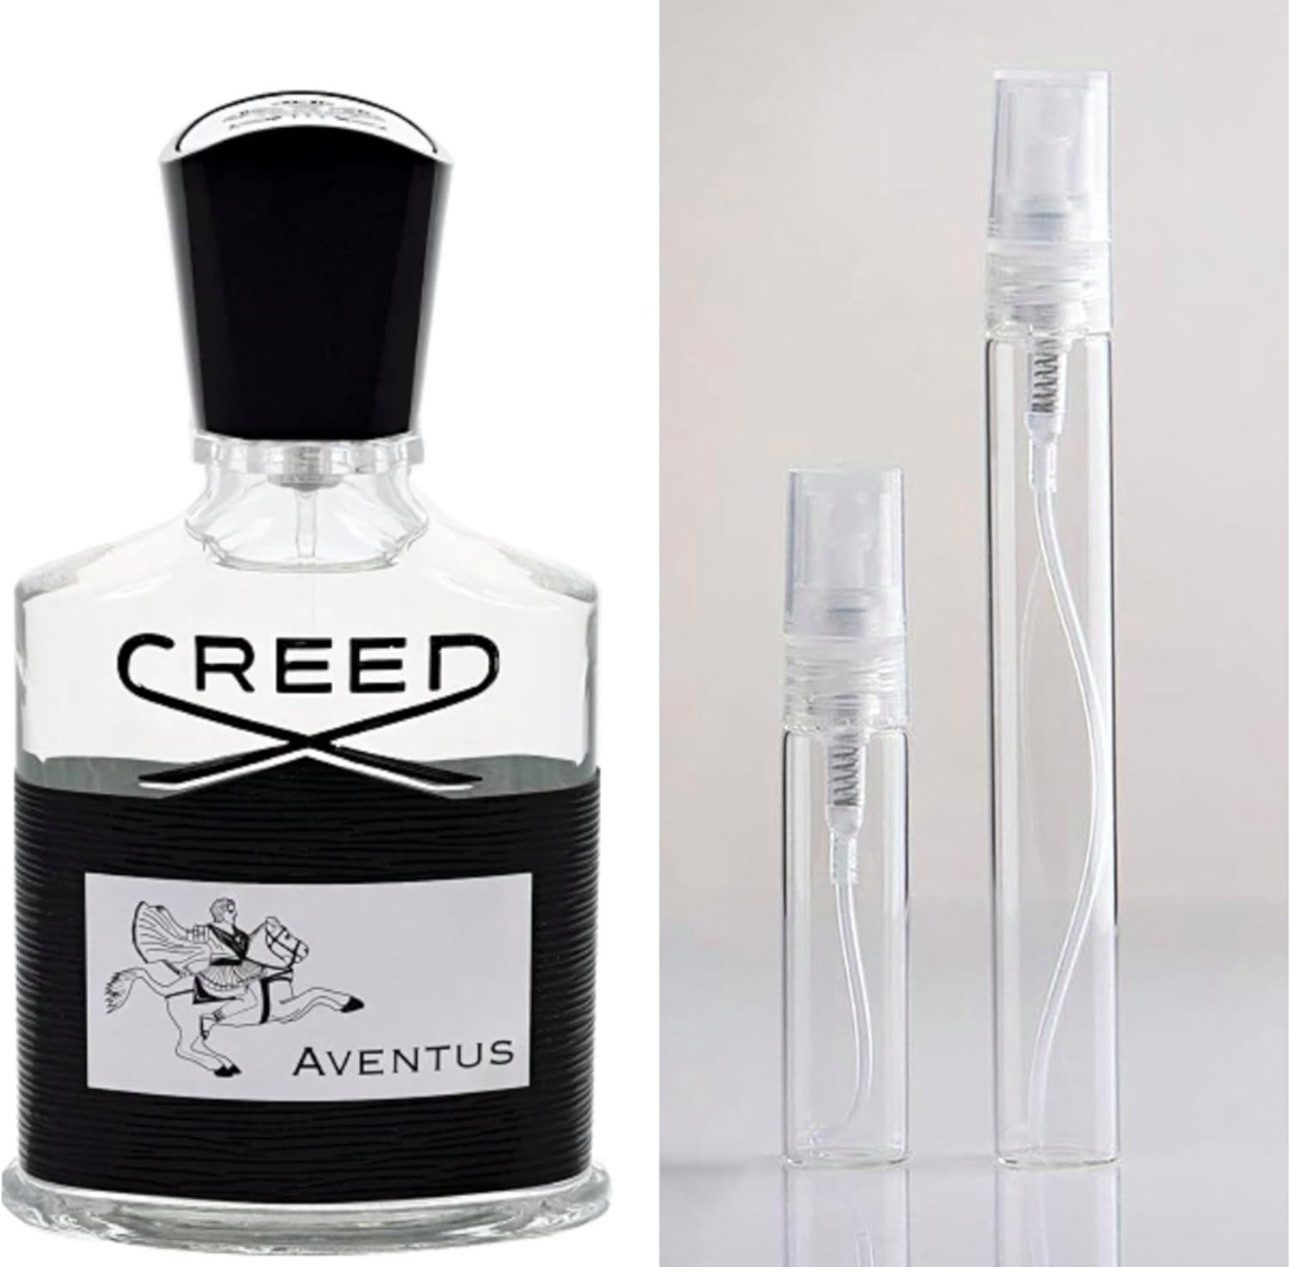 Creed Eau de Parfum Aventus - 5ml - Duftprobe